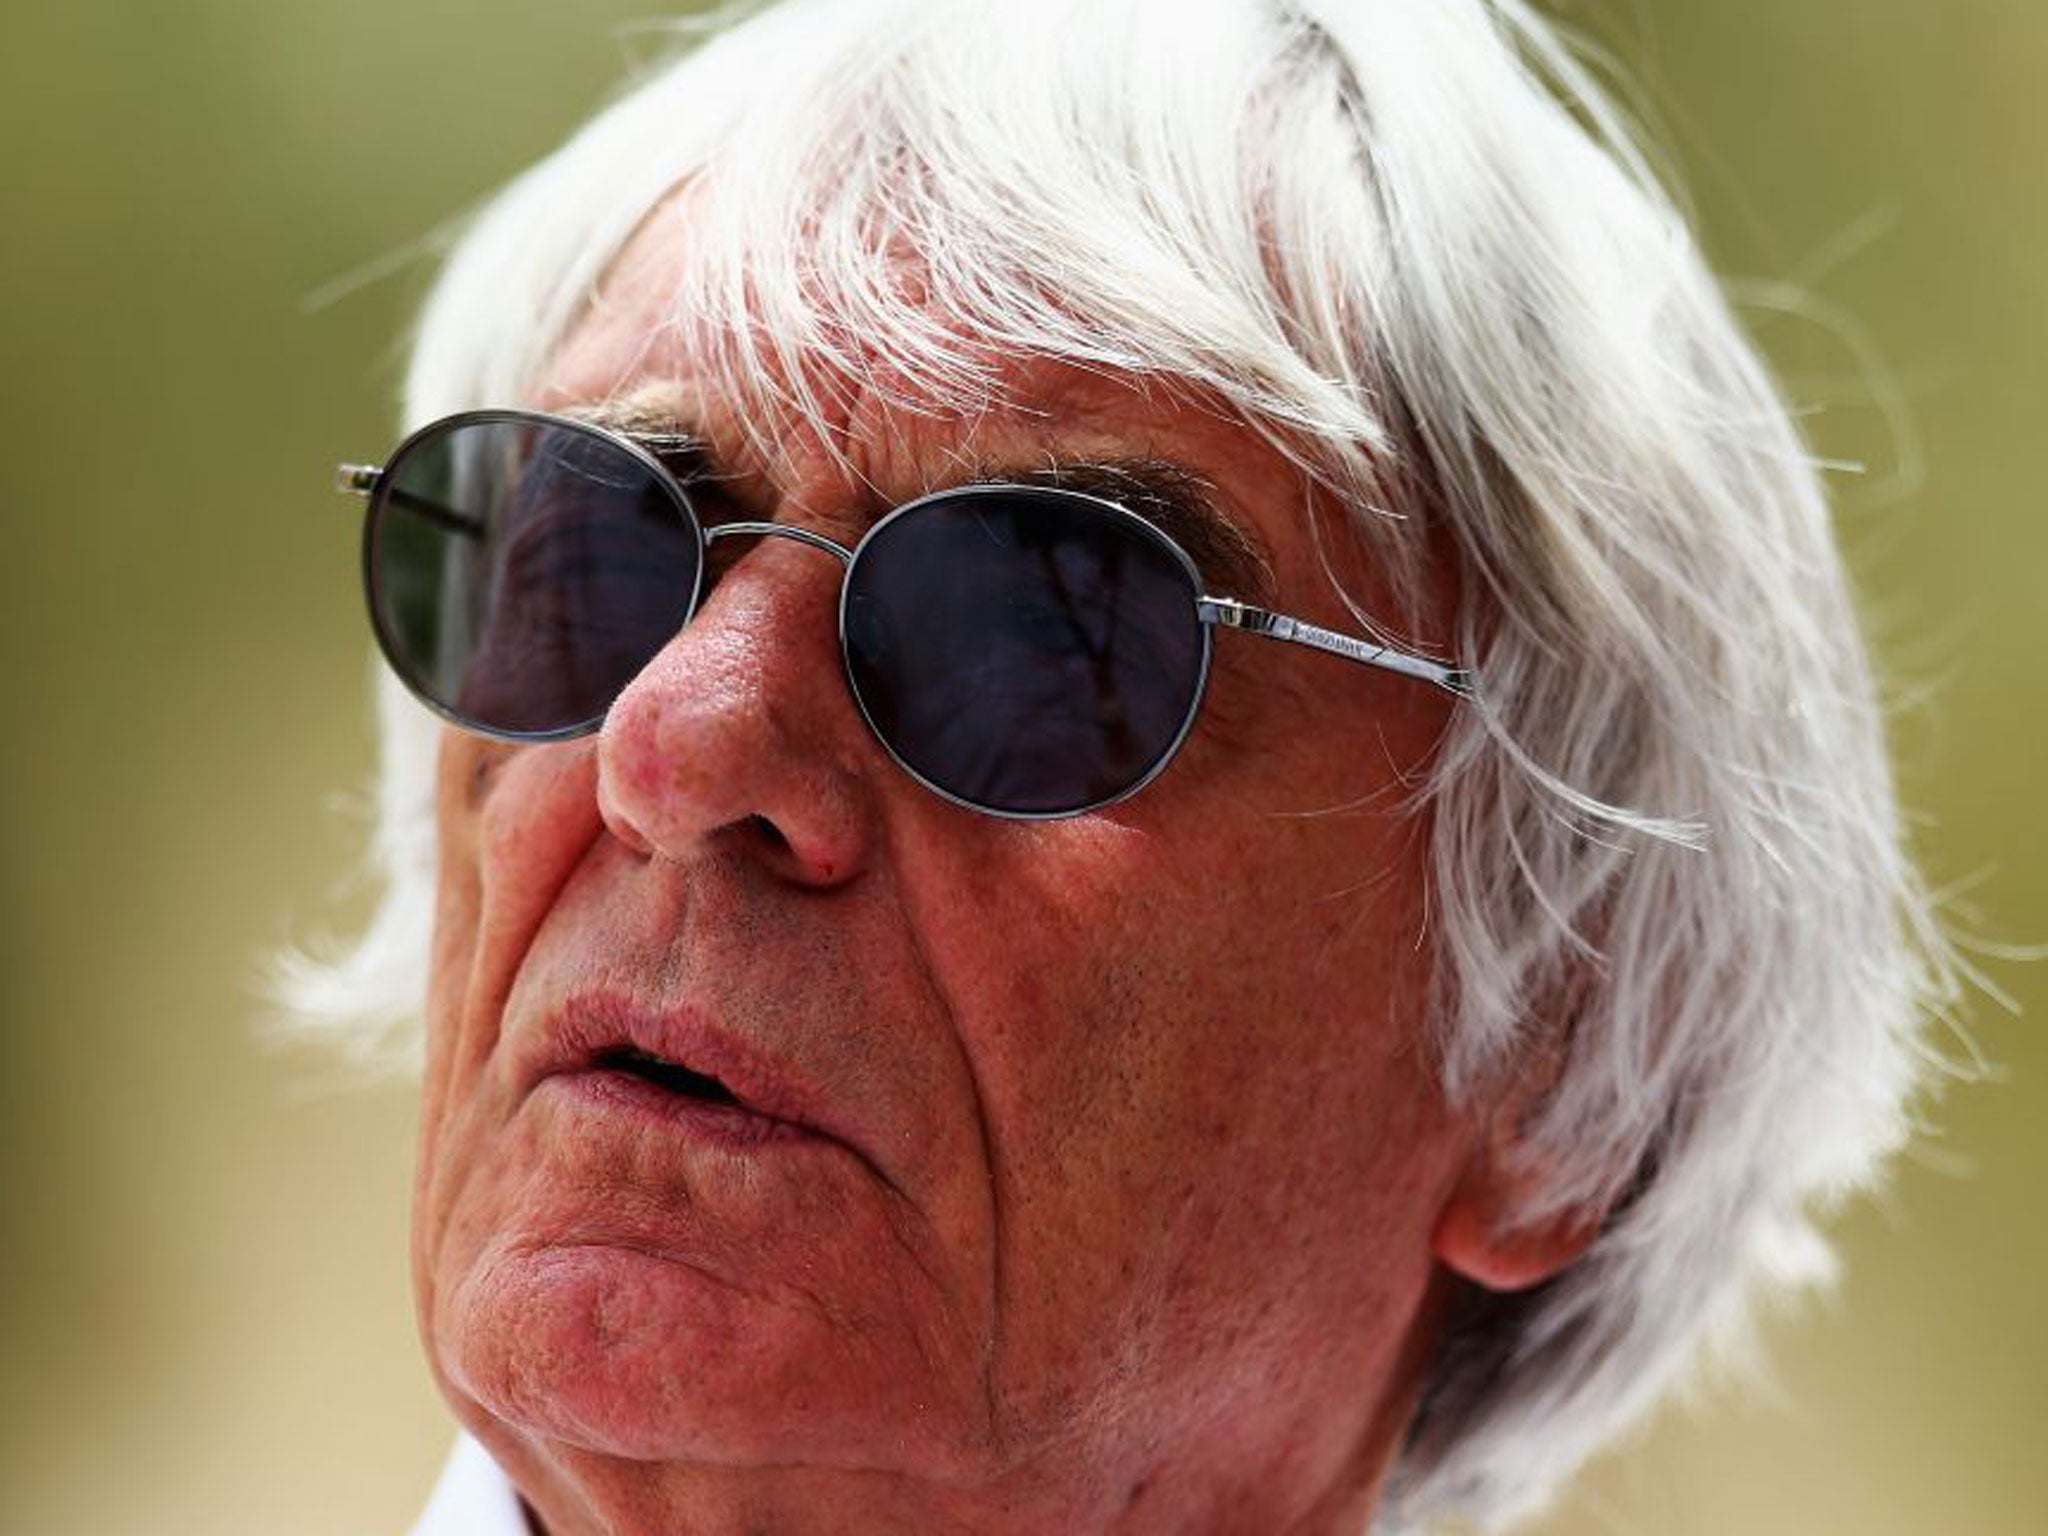 Bernie Ecclestone is seen in the paddock during the Bahrain Formula One Grand Prix at the Bahrain International Circuit